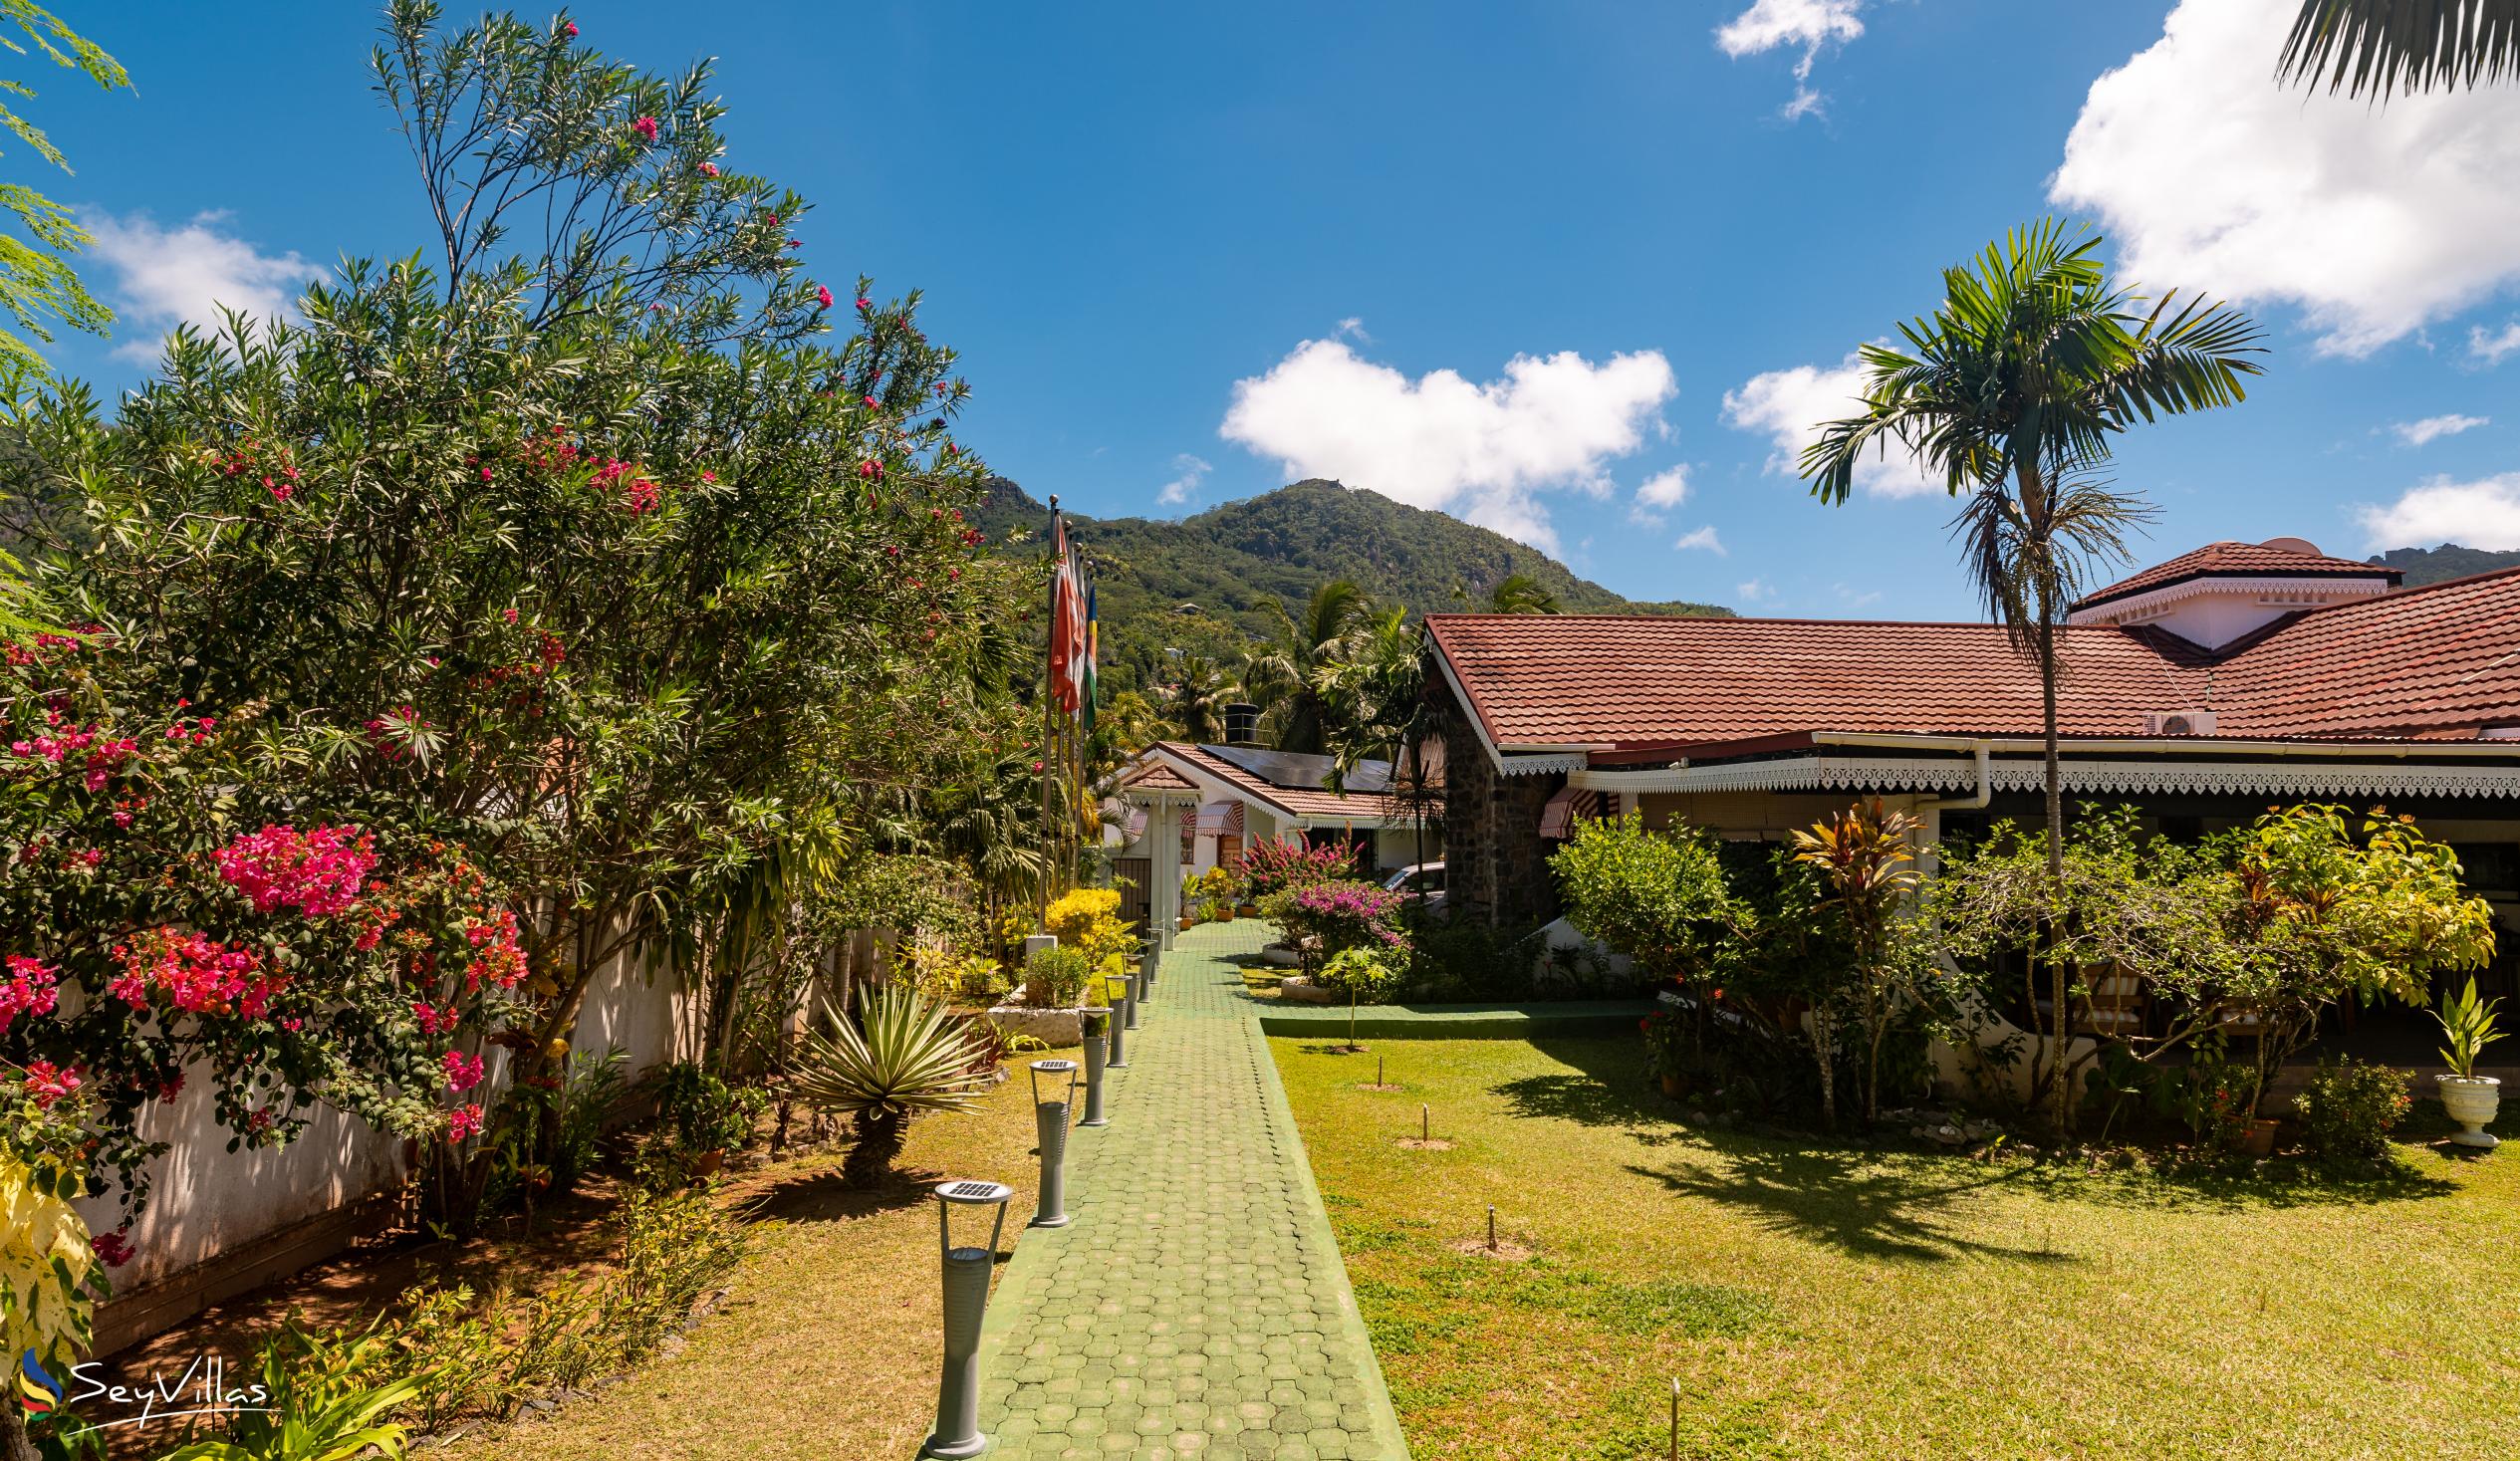 Foto 16: Villa Caballero - Aussenbereich - Mahé (Seychellen)